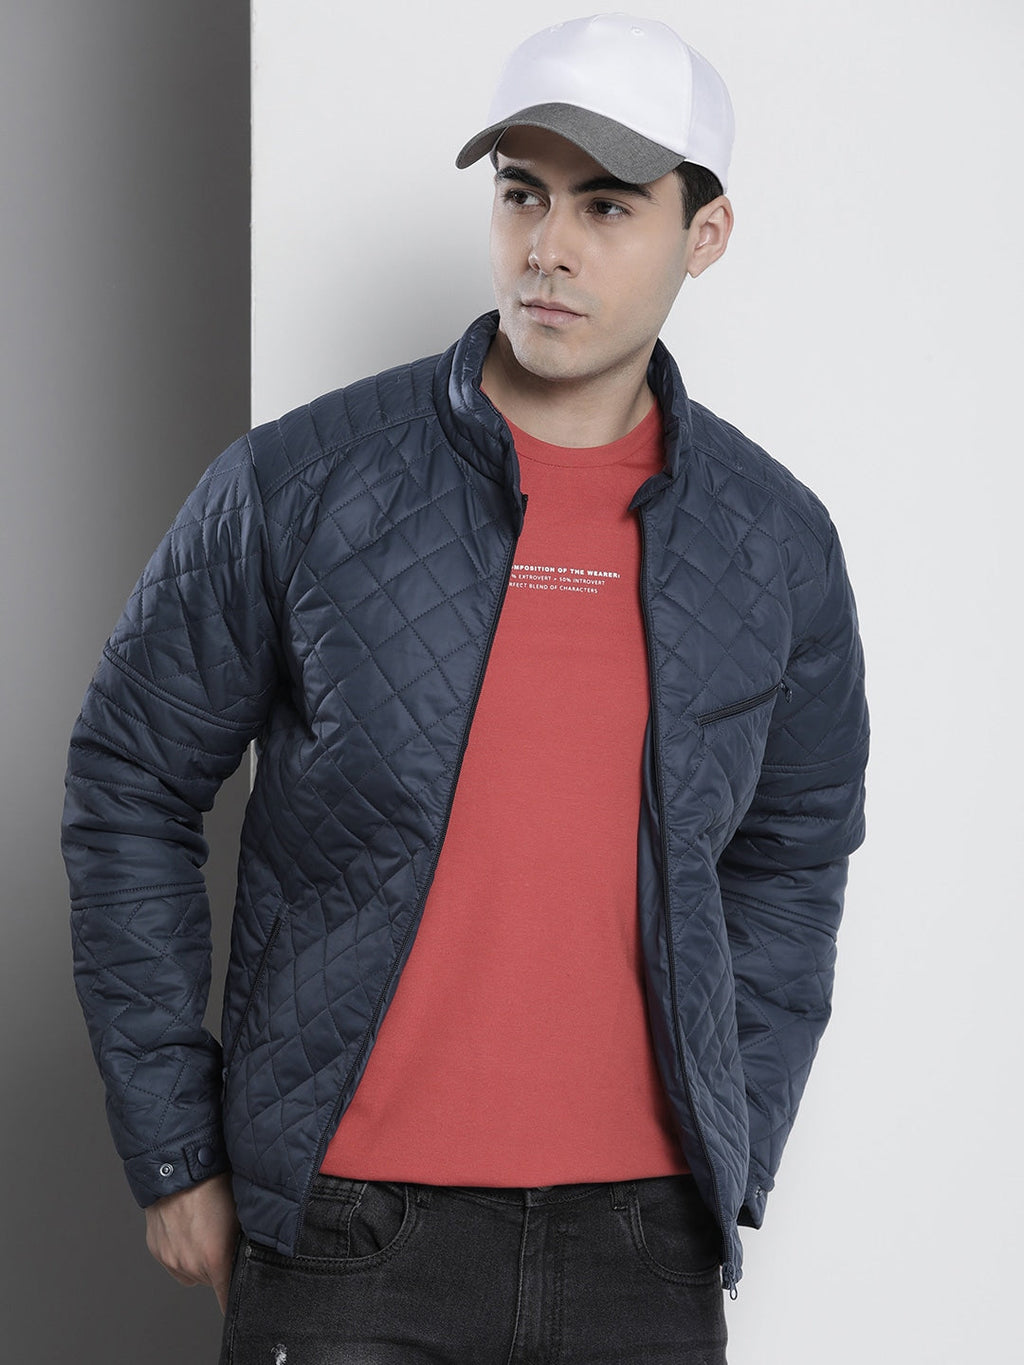 FASESH Jacket for Men,Winter Men's Splice Cap With Long India | Ubuy